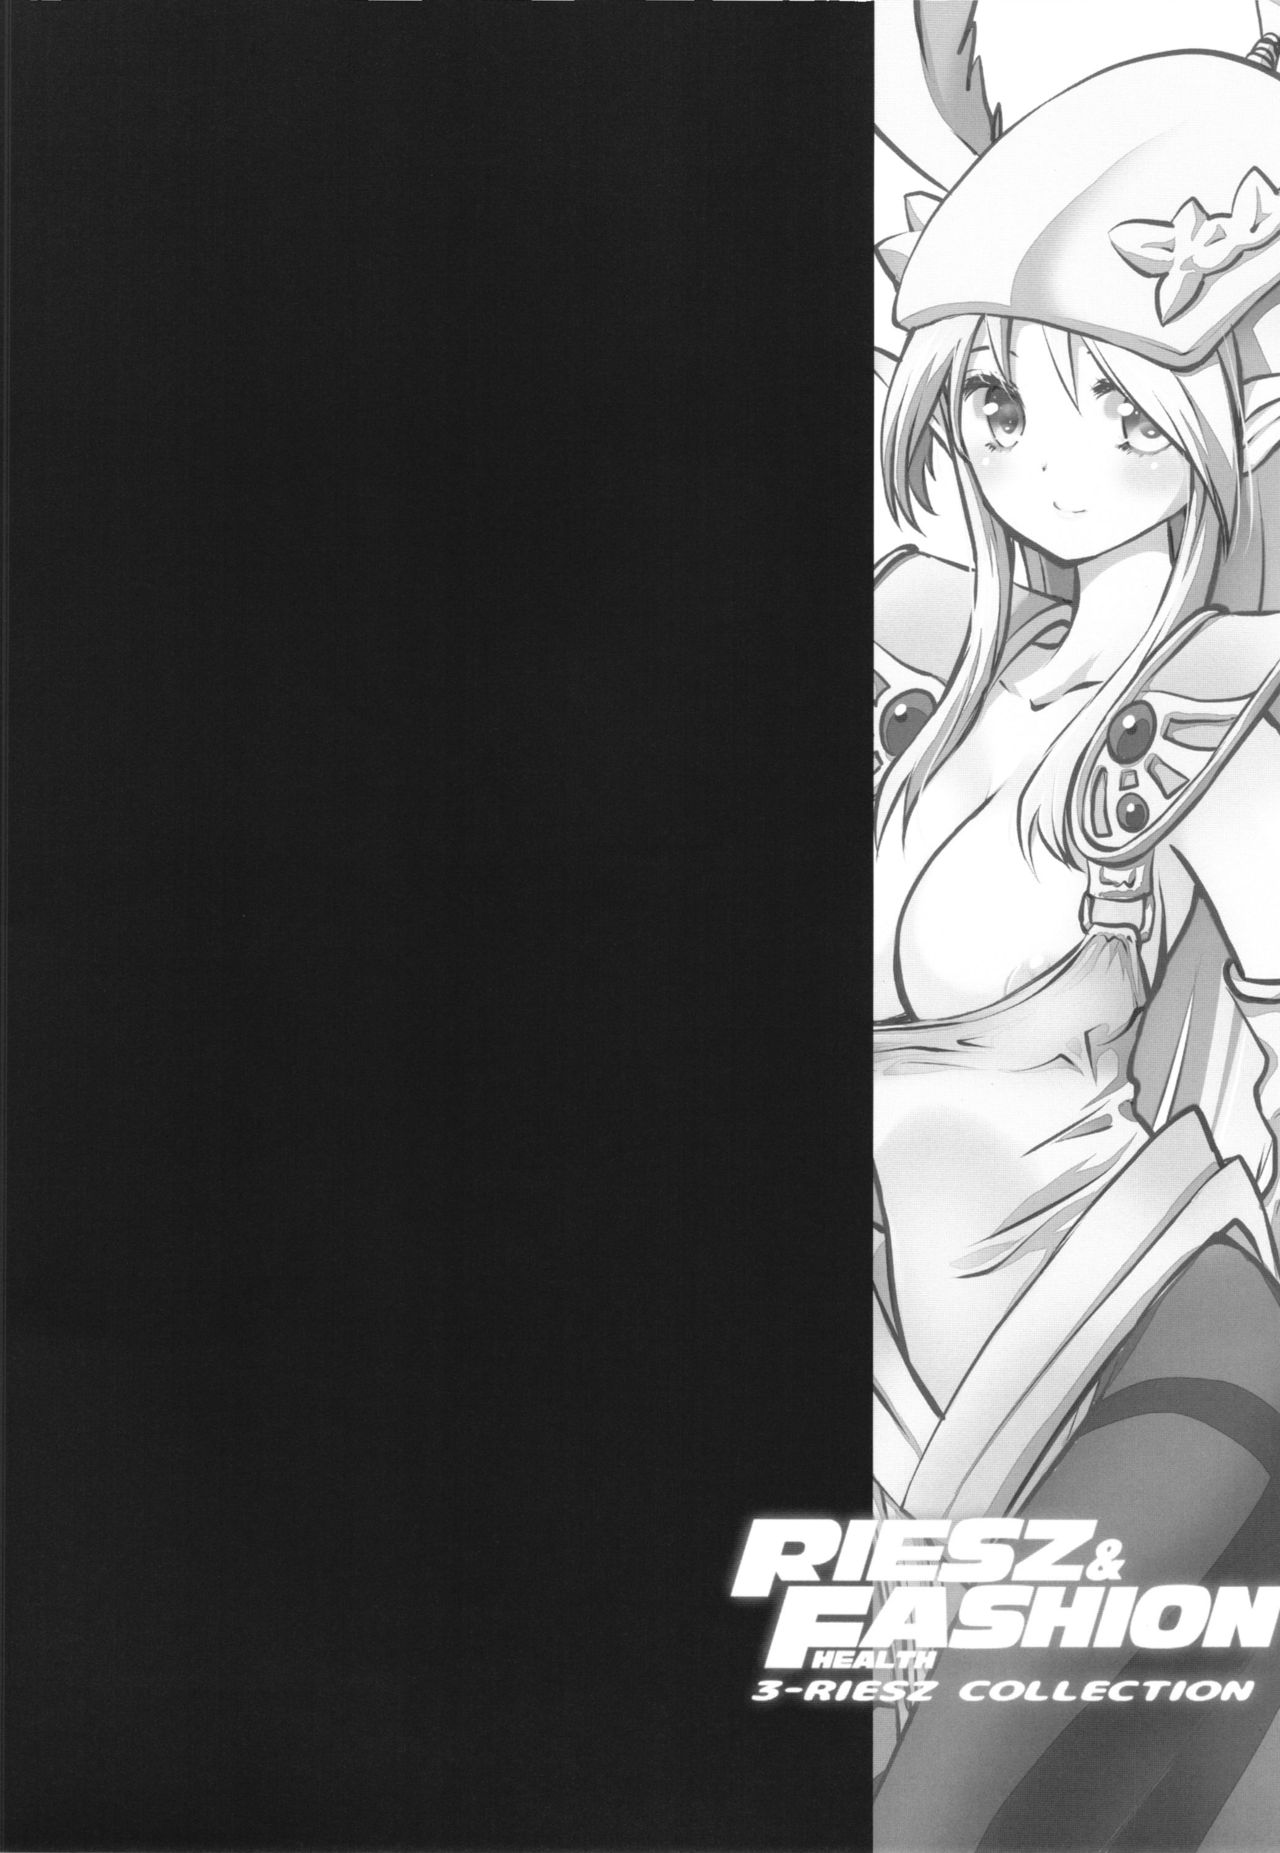 (COMIC1☆10) [Bicolor、NIKKA、ONEGROSS (黒白音子、まりお金田、144)] RIESZ&FASHION 3-RIESZ COLLECTION＋ペーパー (聖剣伝説3)